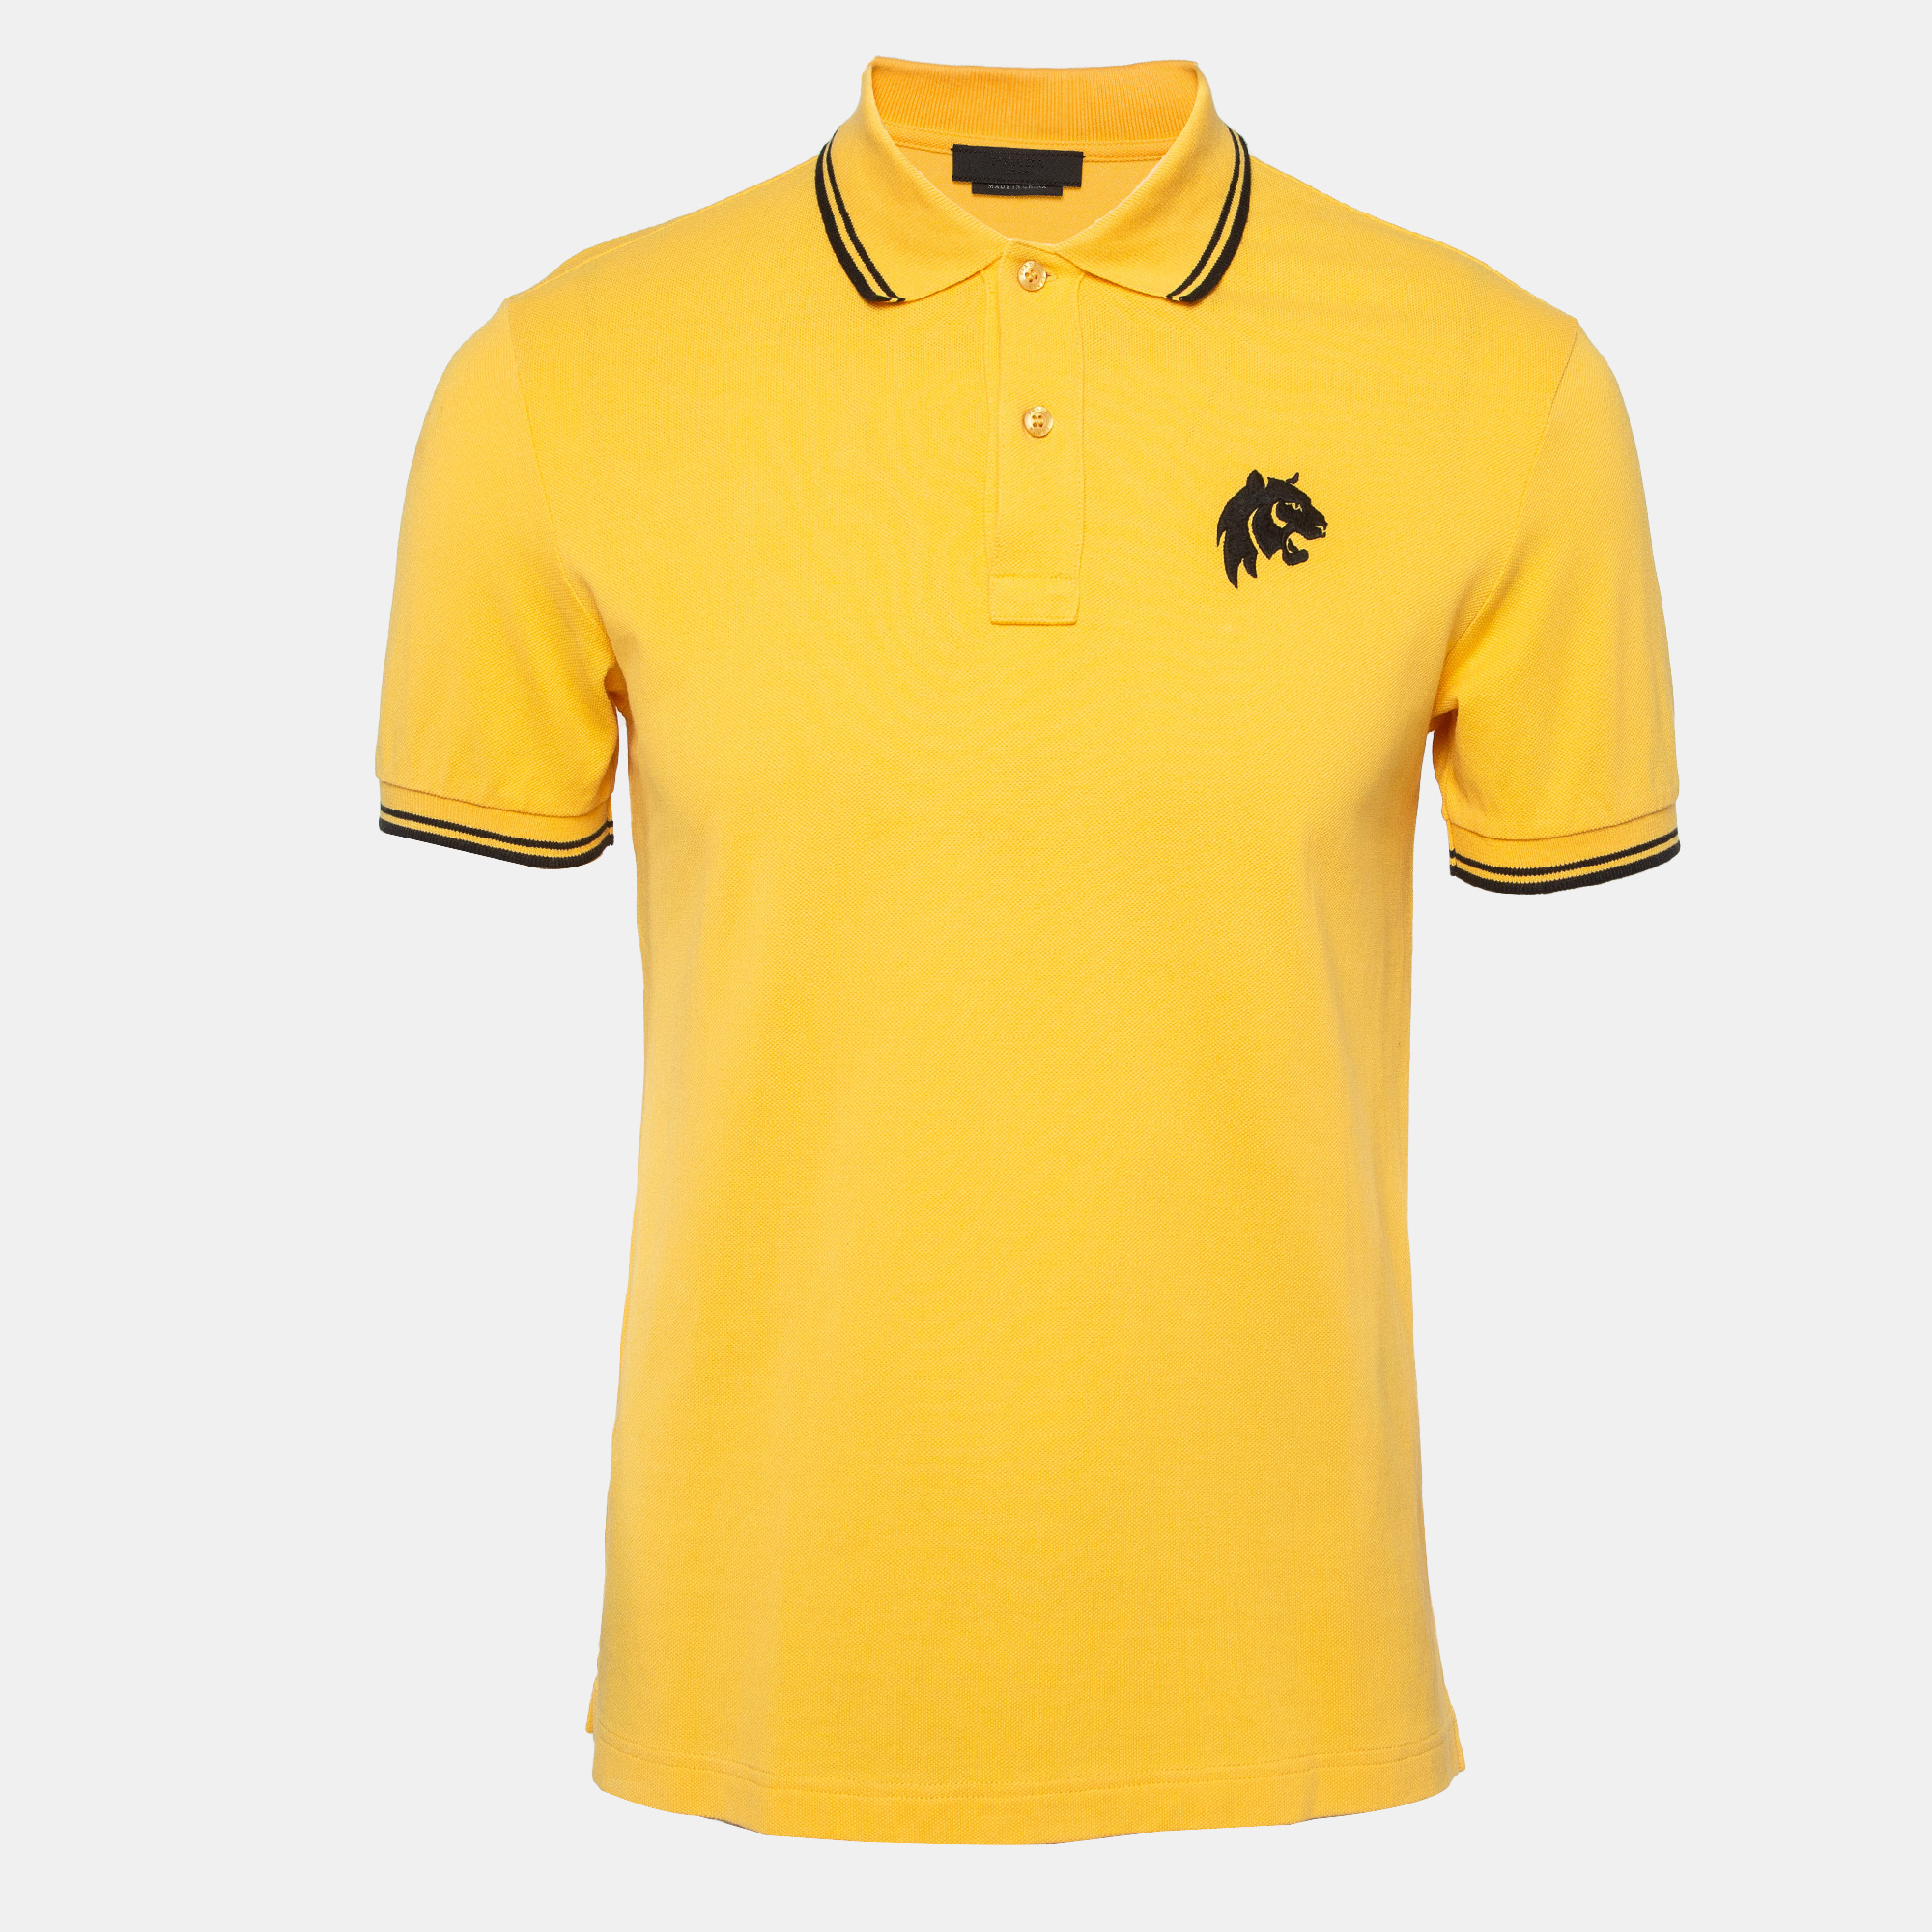 Prada yellow embroidered cotton pique polo t-shirt m